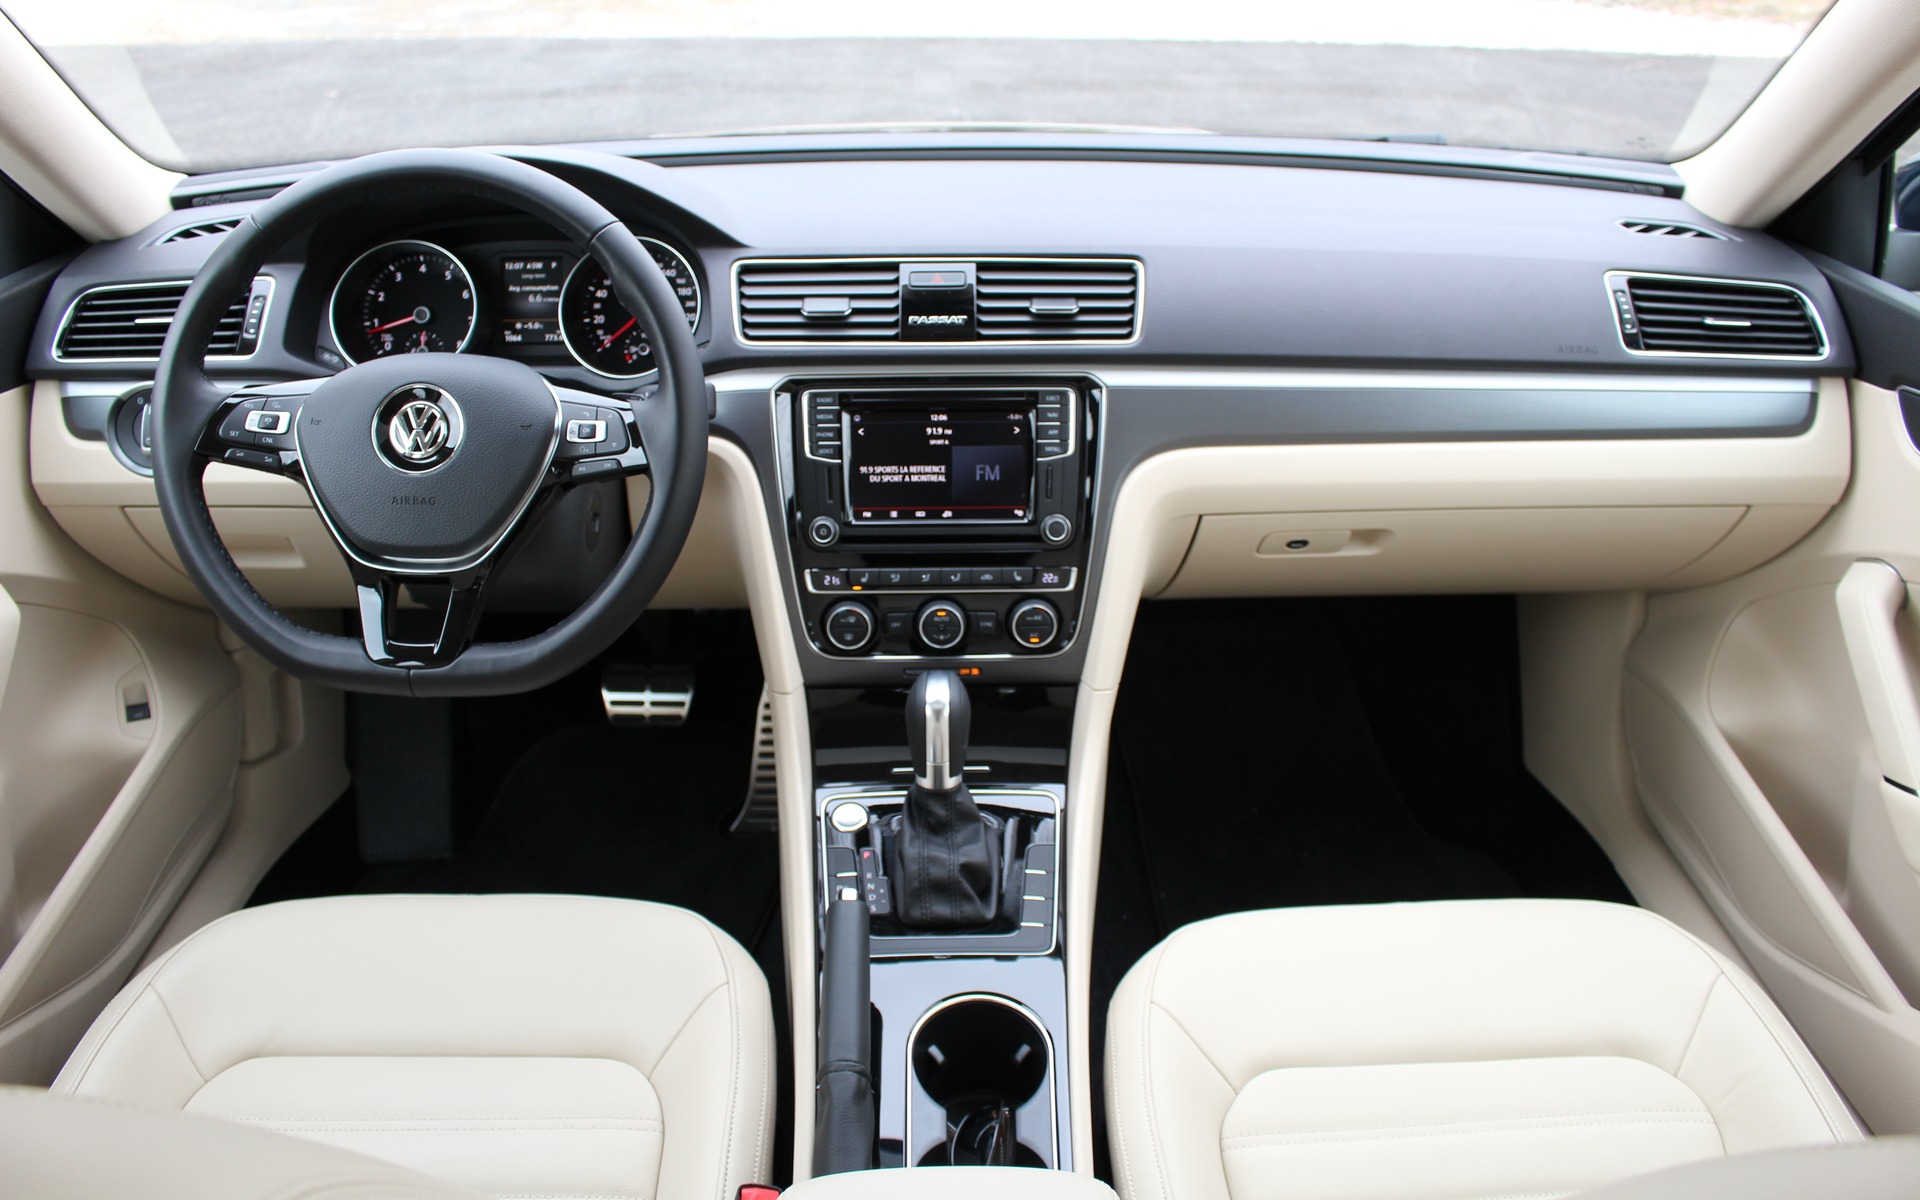 Volkswagen Passat CC interior - Cockpit